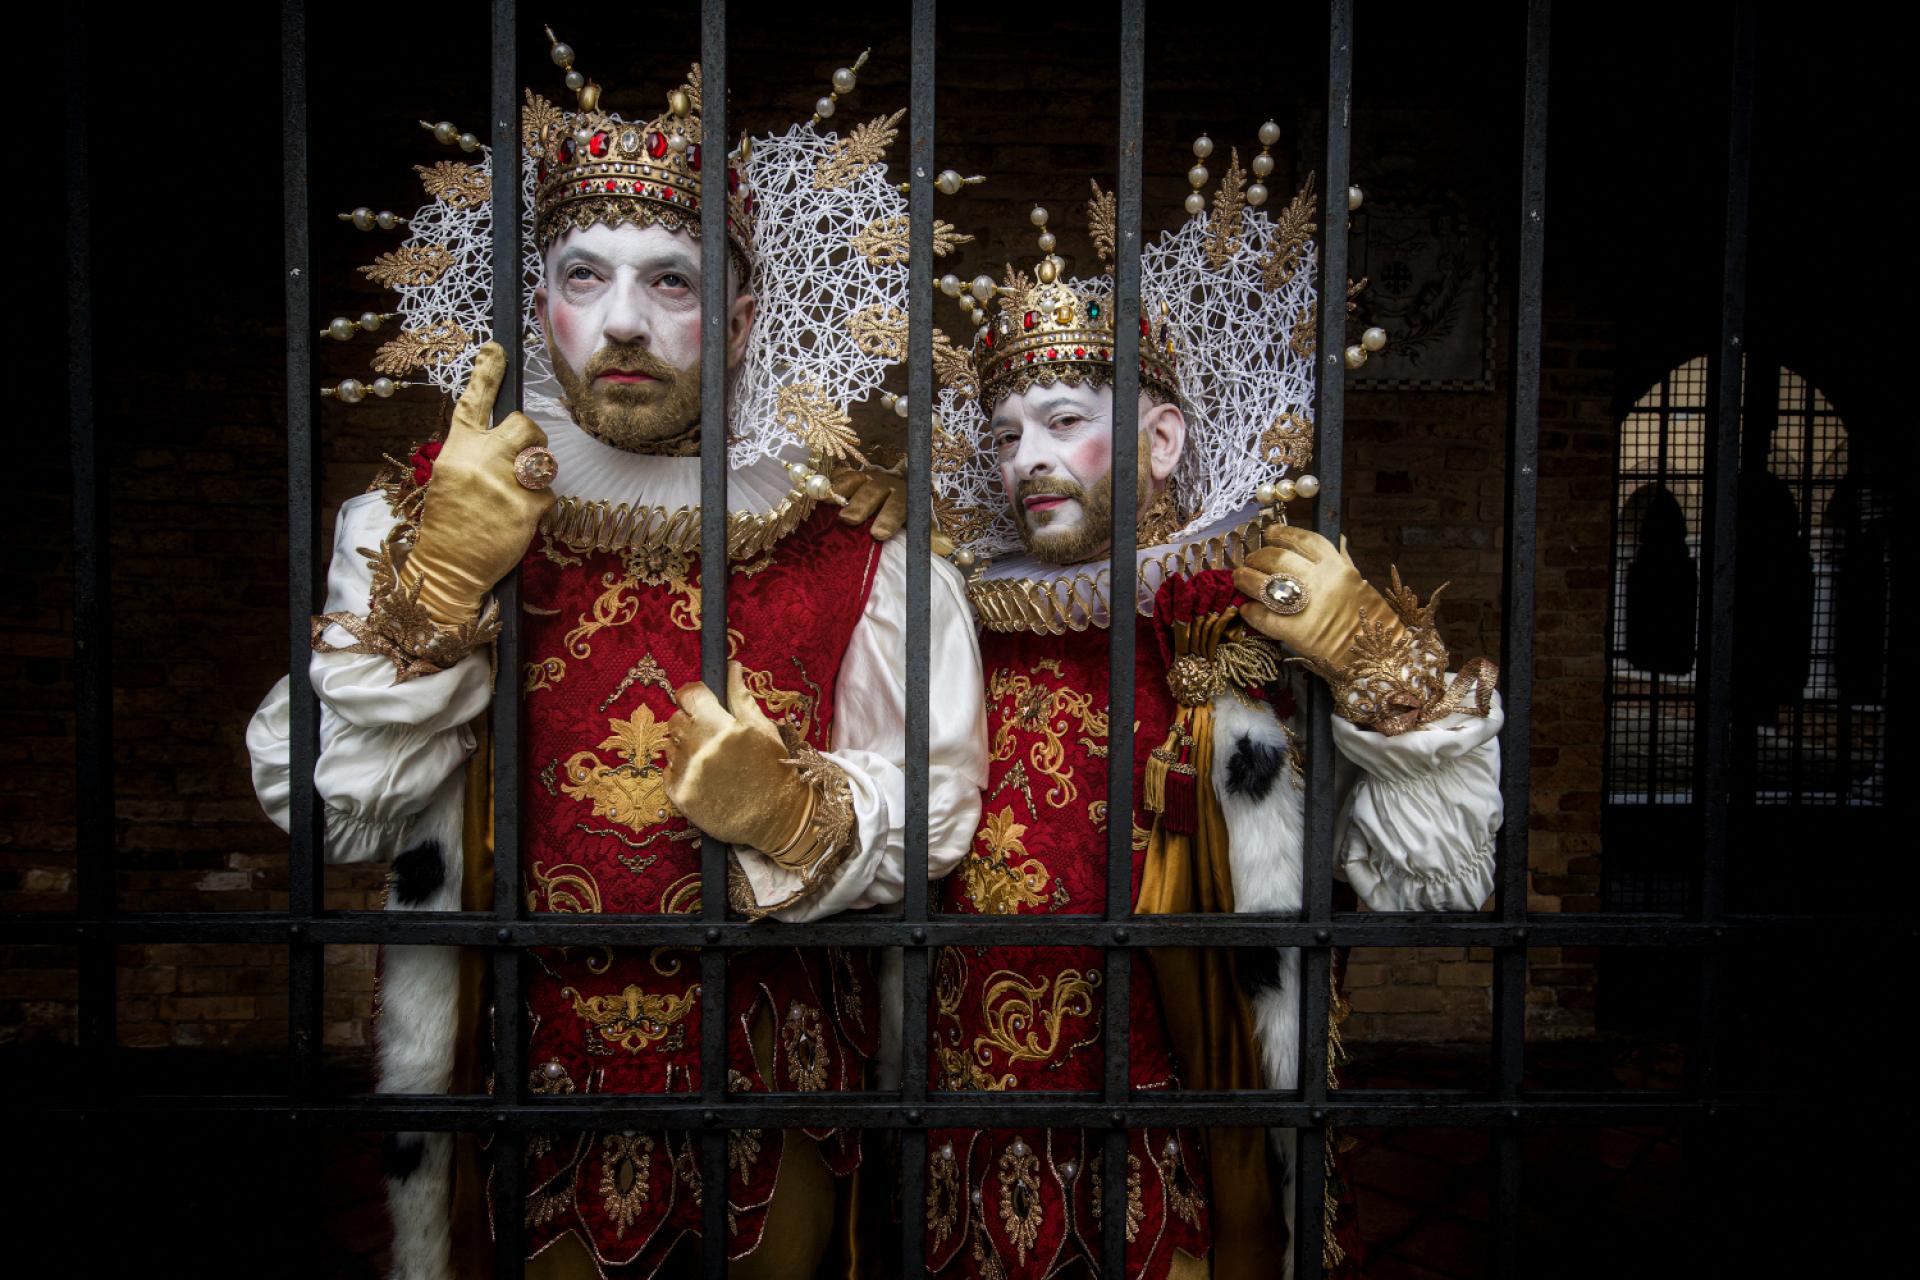 European Photography Awards Winner - The Venice Carnevale